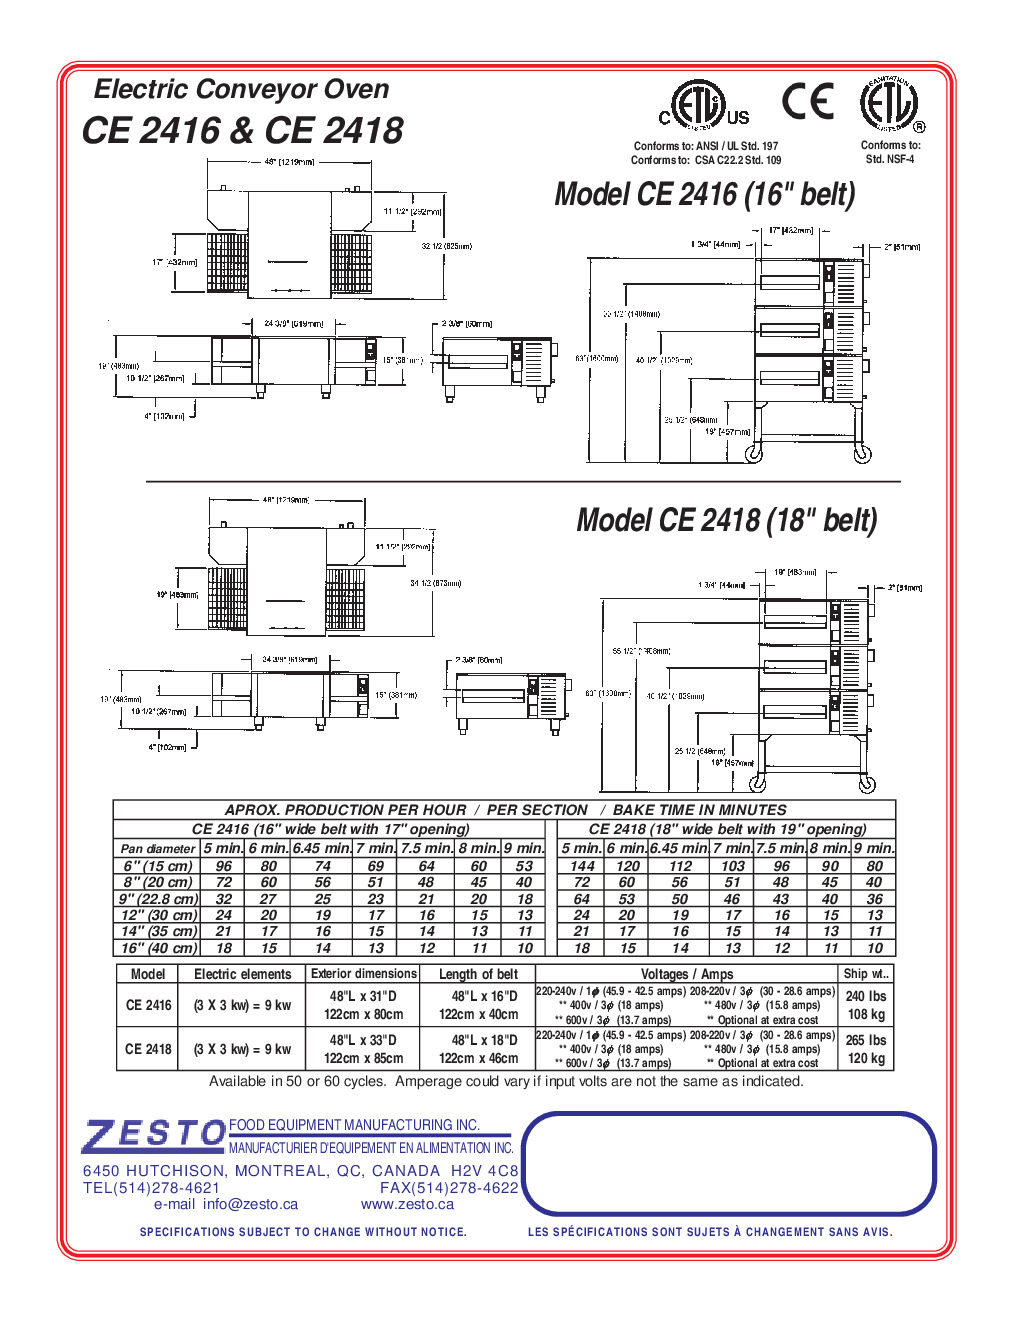 Zesto CE 2416 Conveyor Electric Oven